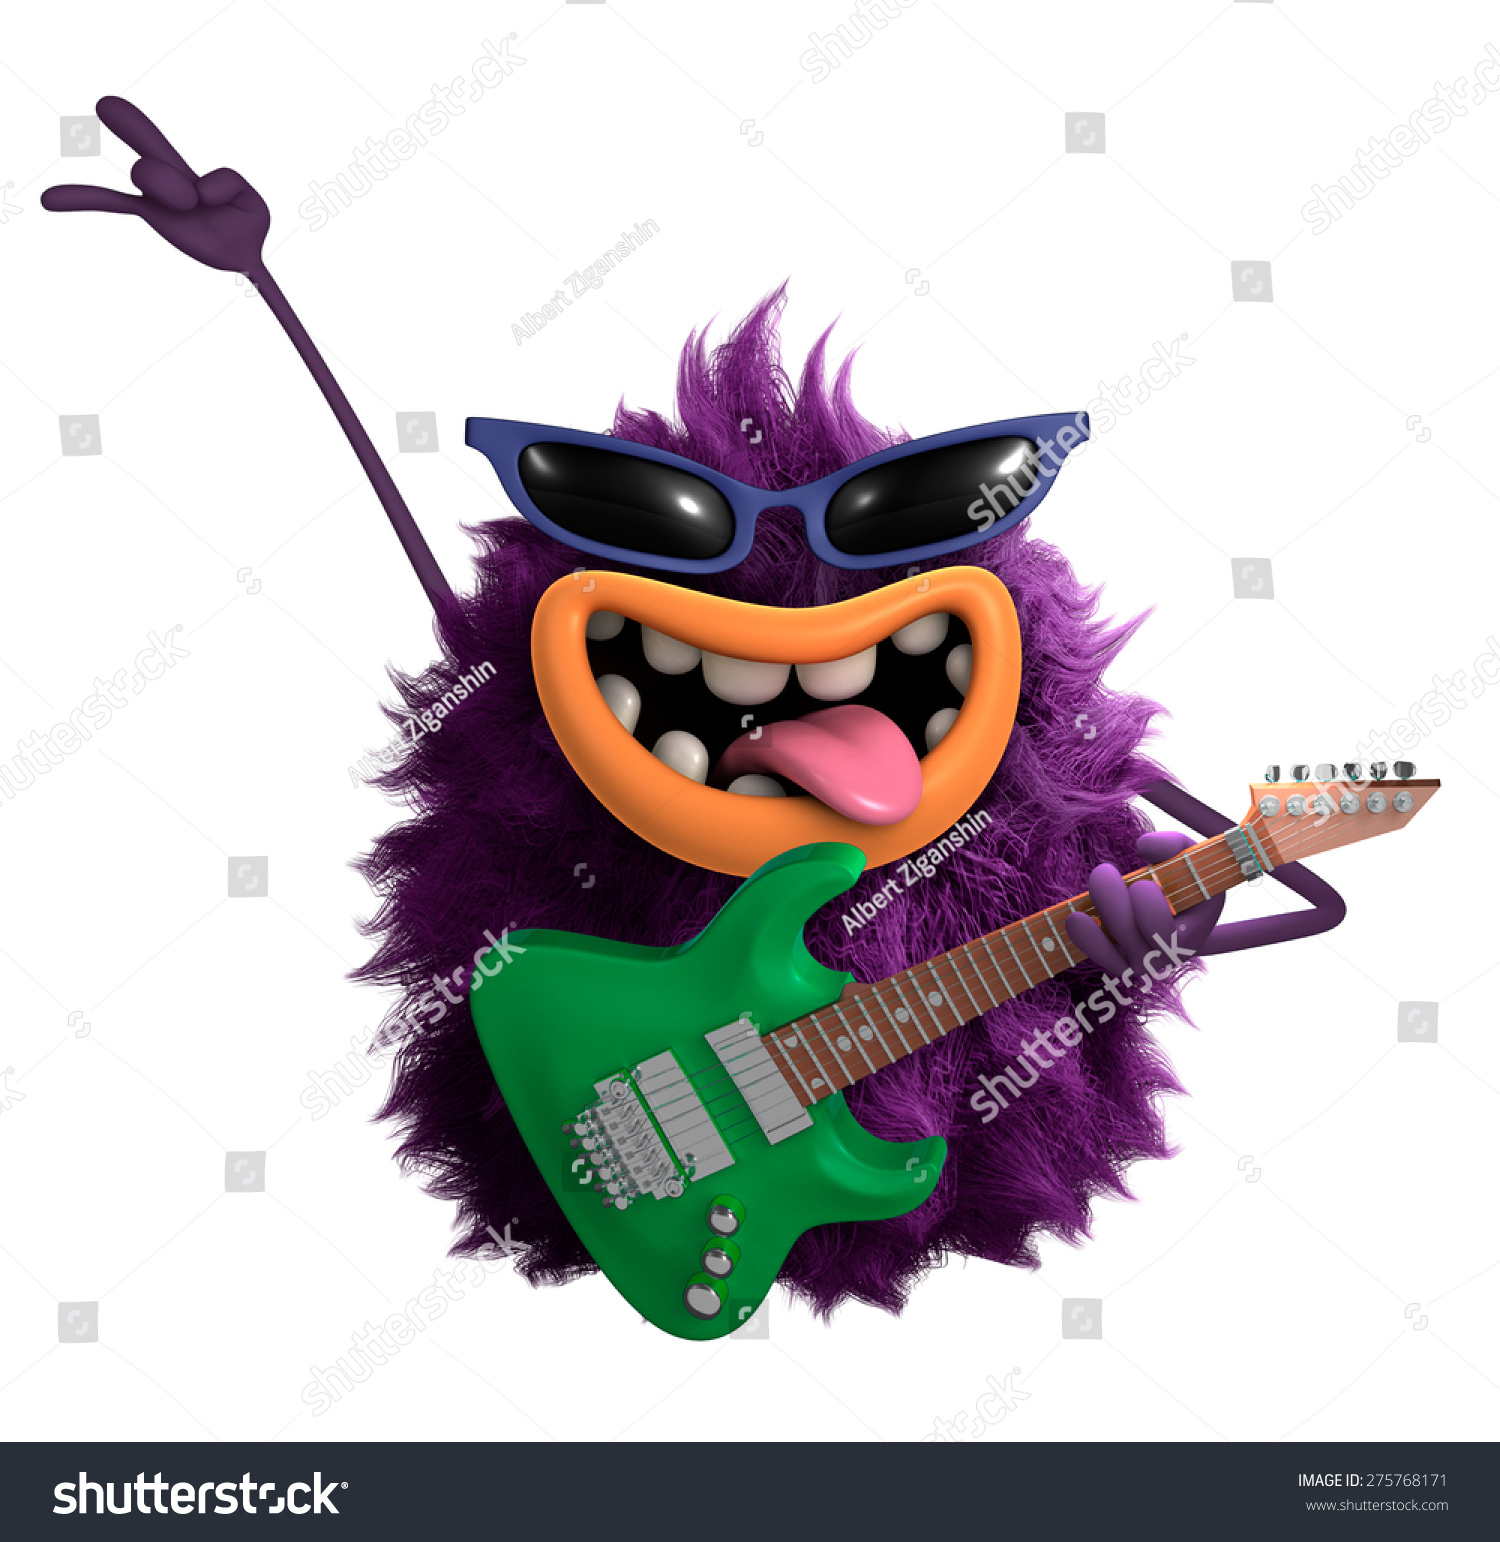 Purple Cartoon Hairy Monster 3d Stock Photo 275768171 : Shutterstock